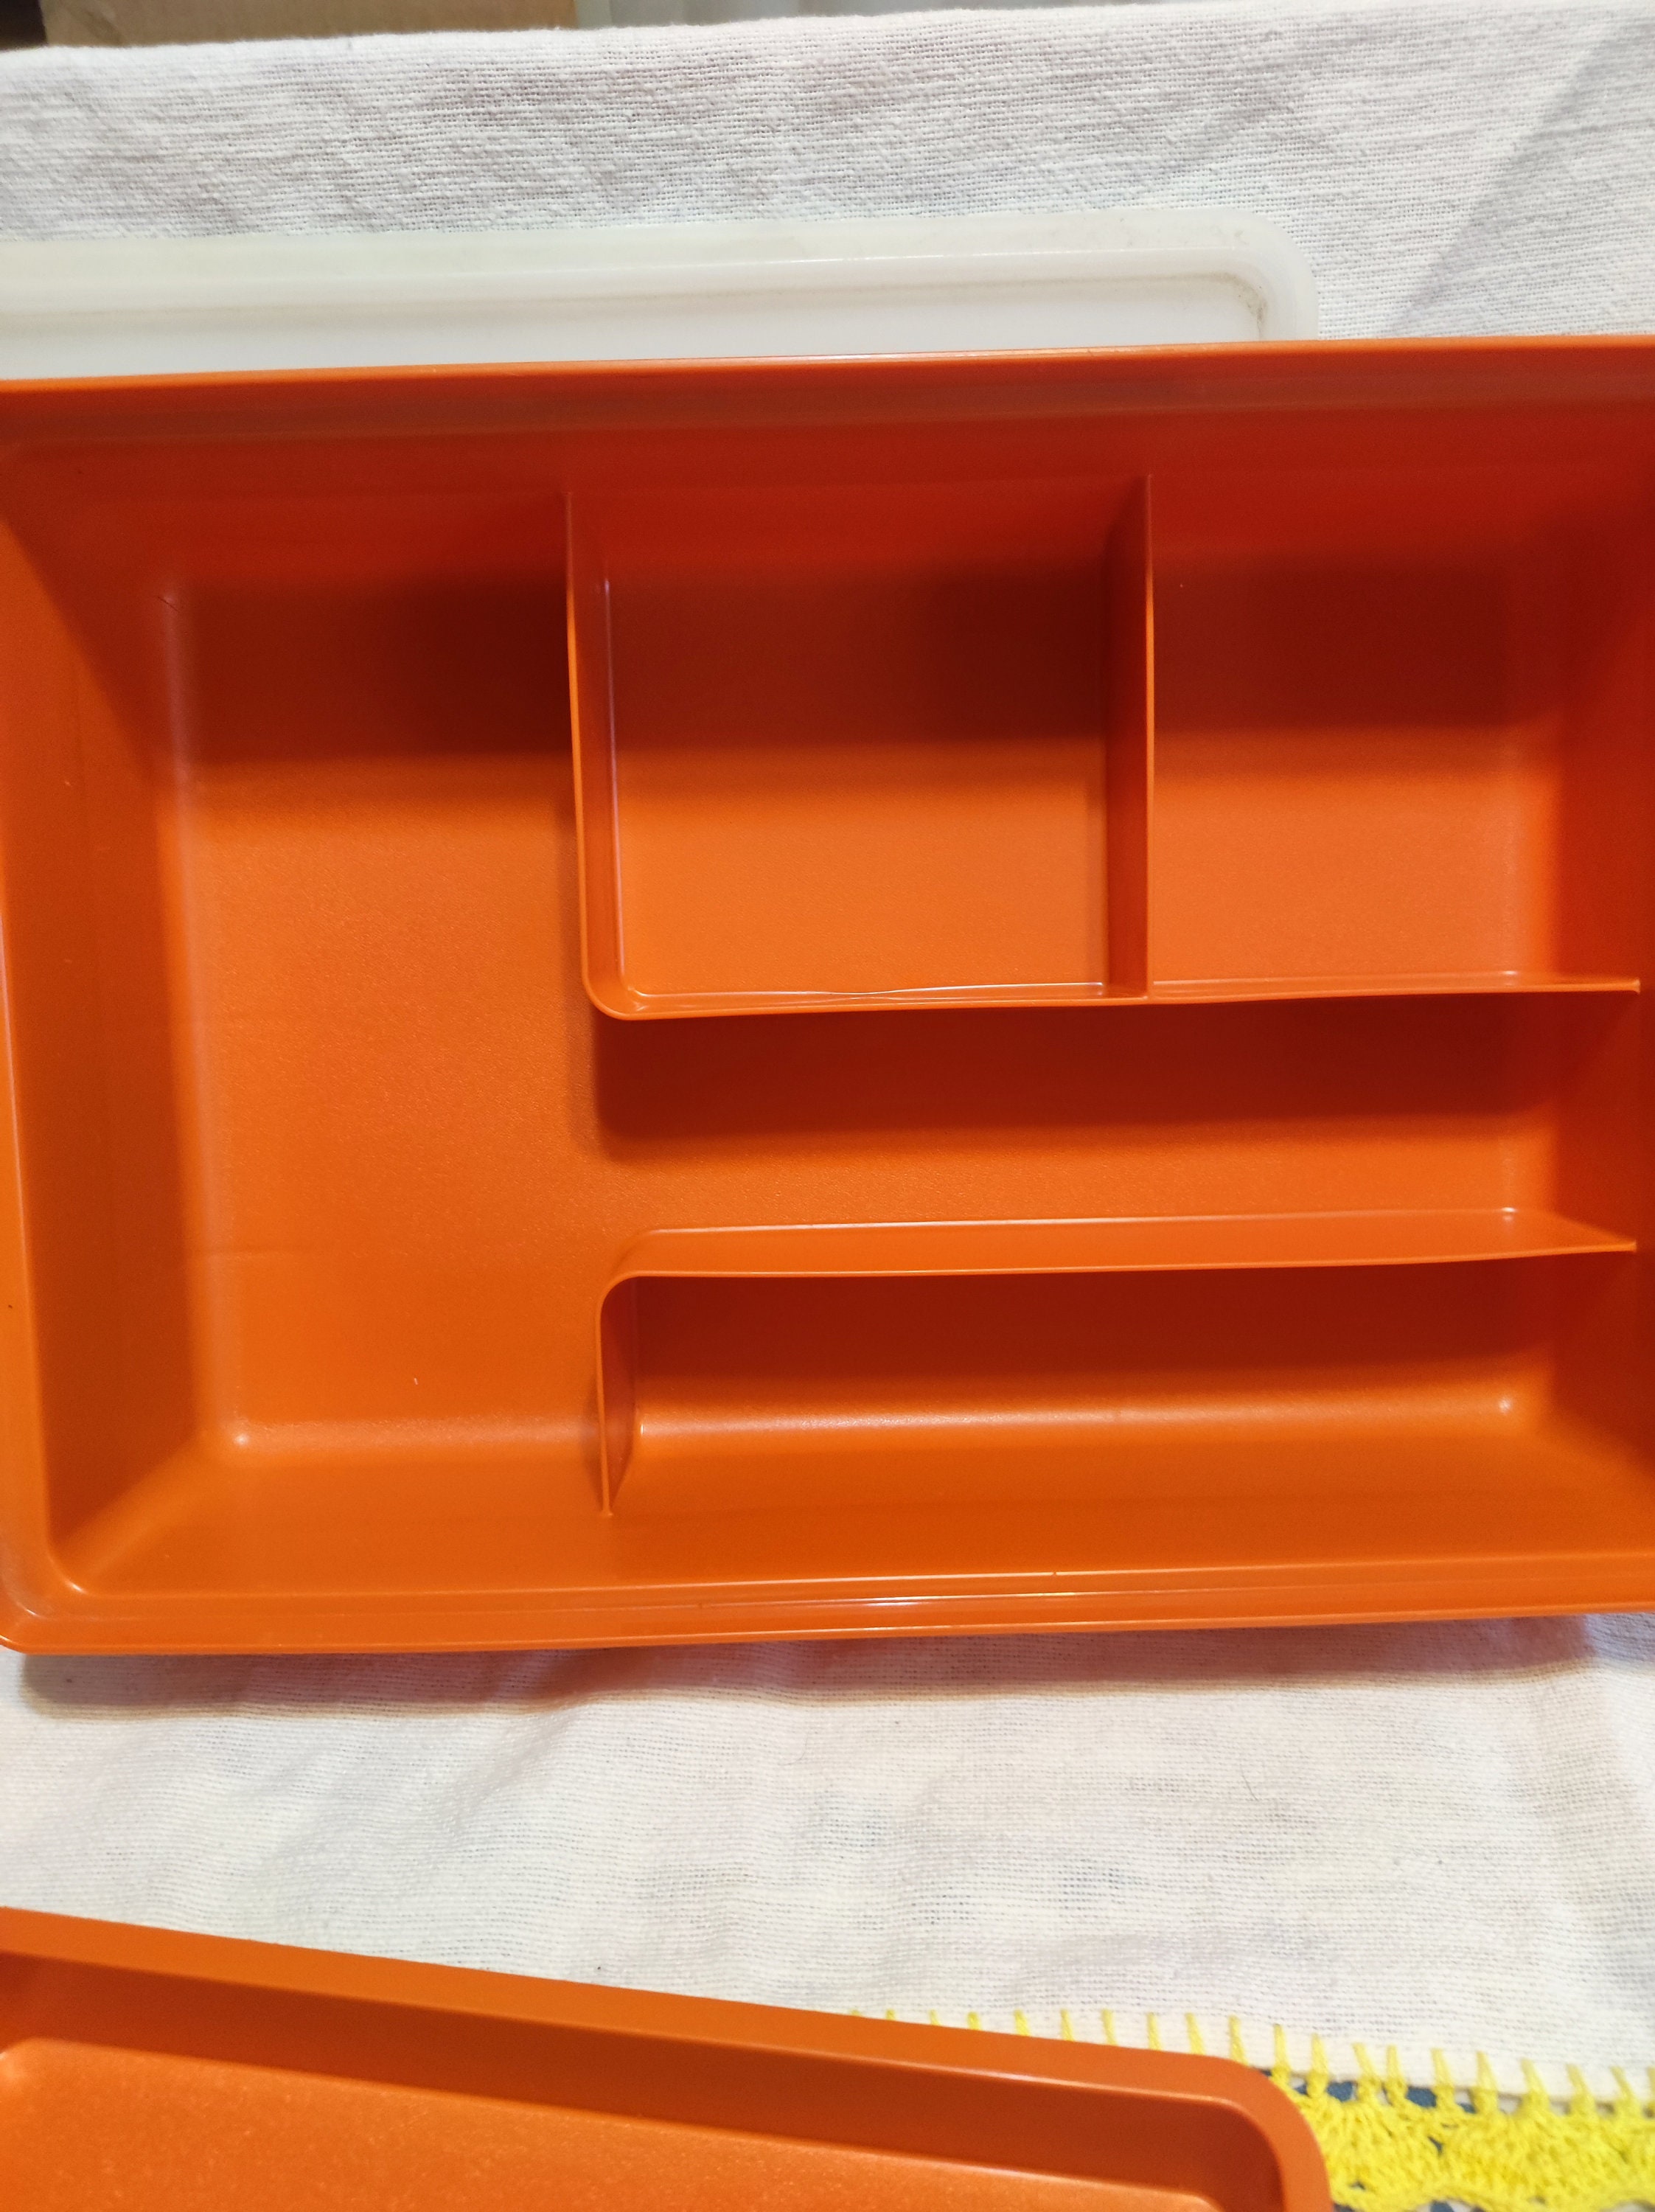 1980 Tupperware Hobby Organizer Orange Divided Plastic Container